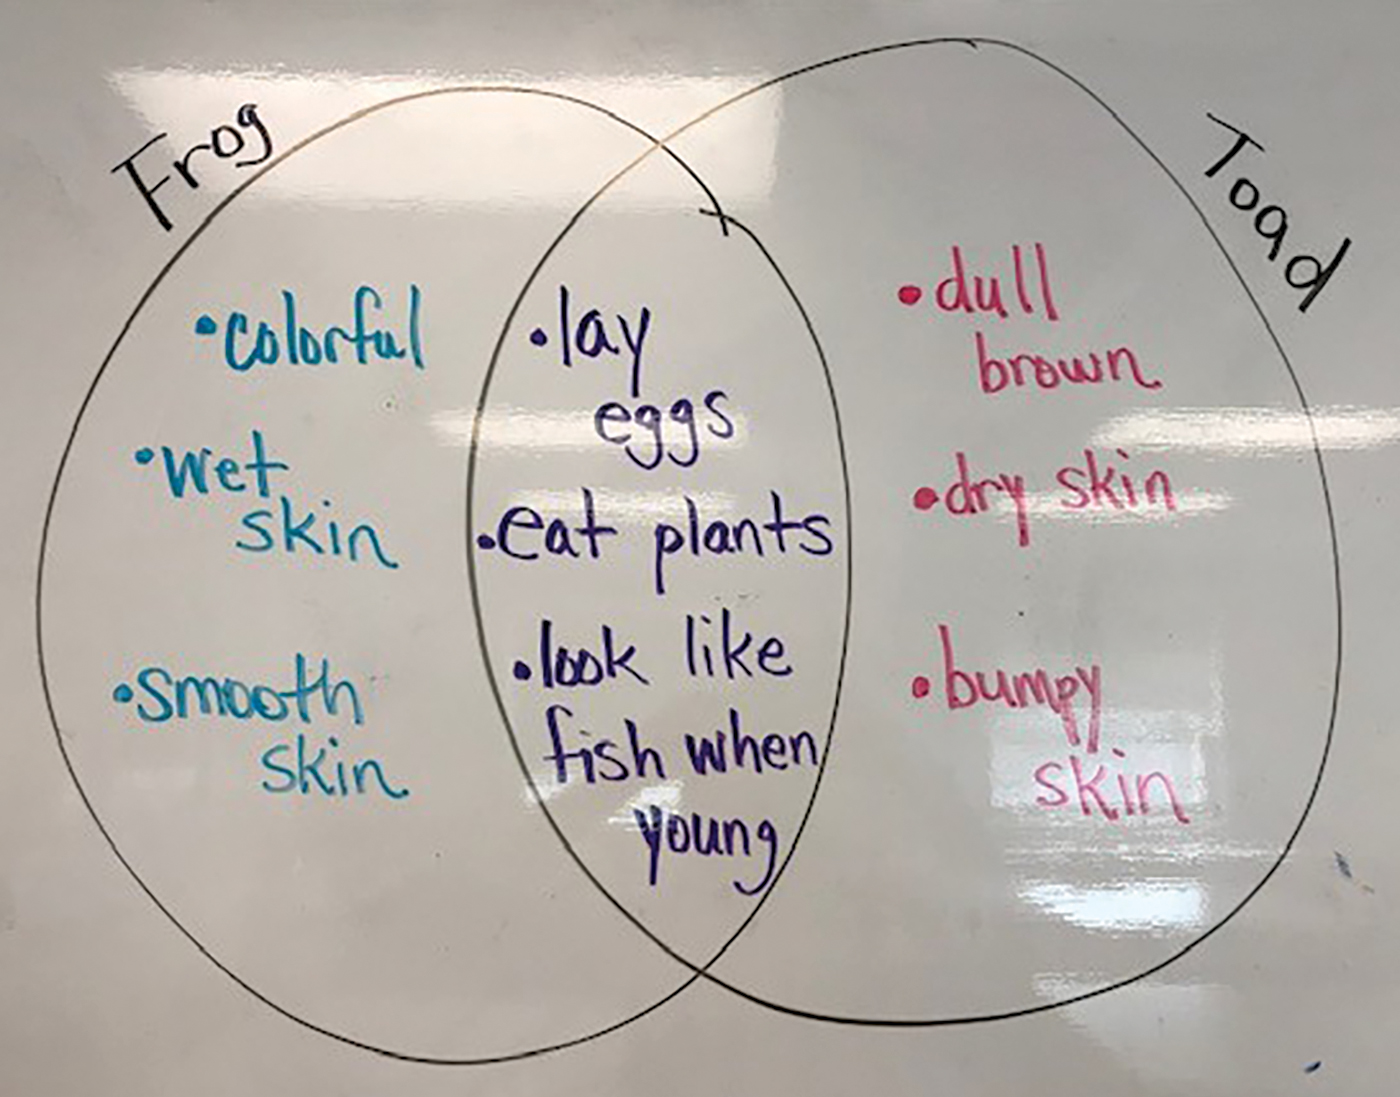 Example of a Venn diagram for comparison.